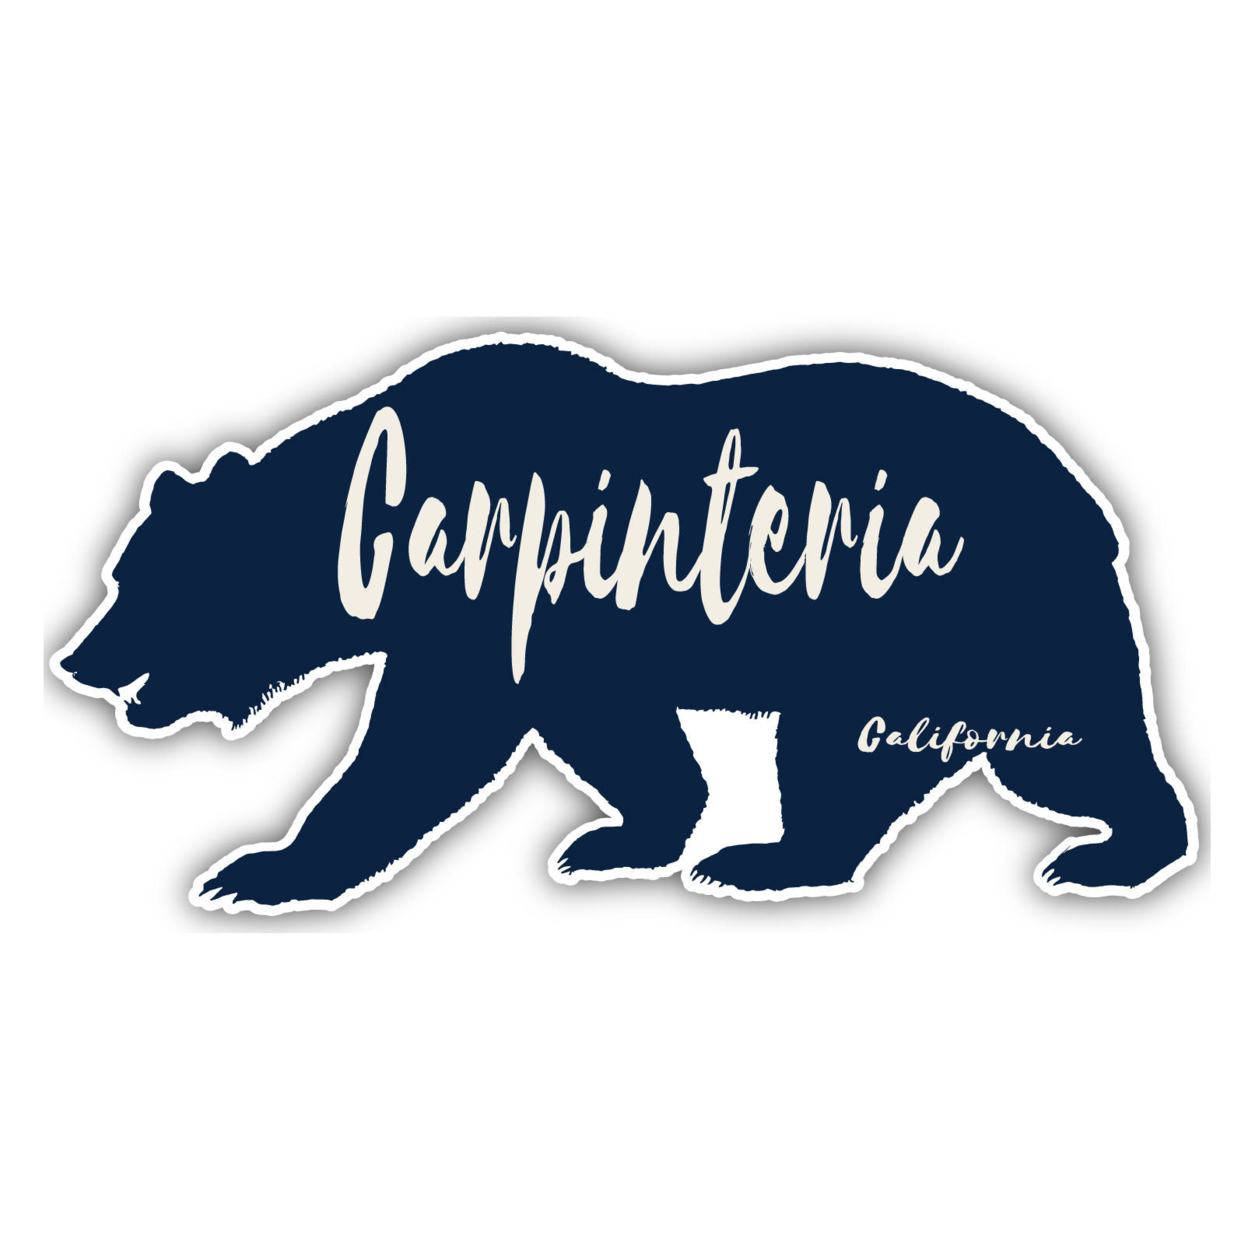 Carpinteria California Souvenir Decorative Stickers (Choose Theme And Size) - Single Unit, 12-Inch, Camp Life